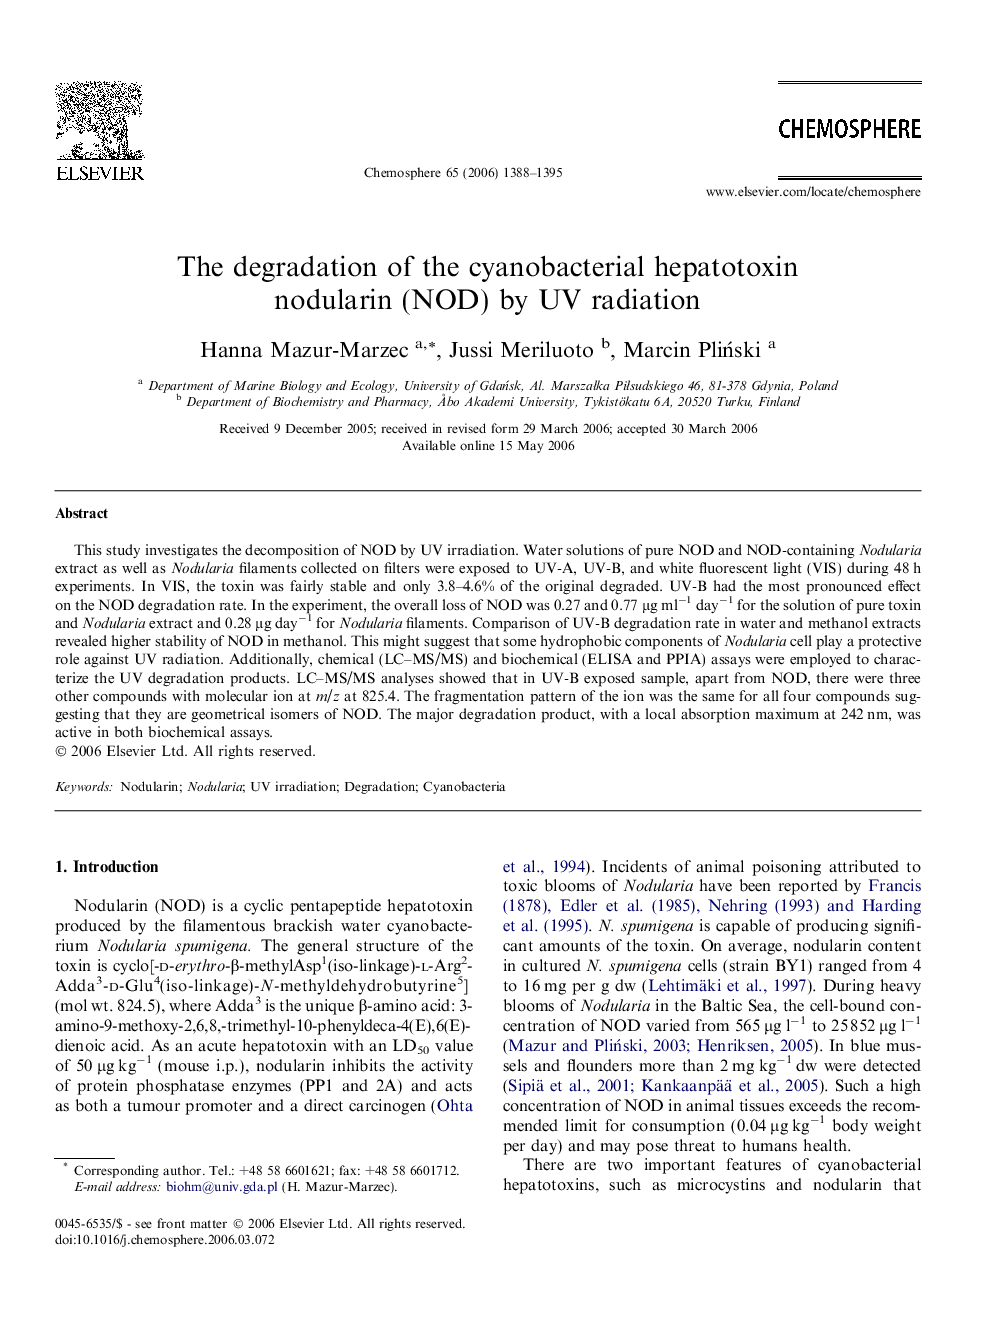 The degradation of the cyanobacterial hepatotoxin nodularin (NOD) by UV radiation